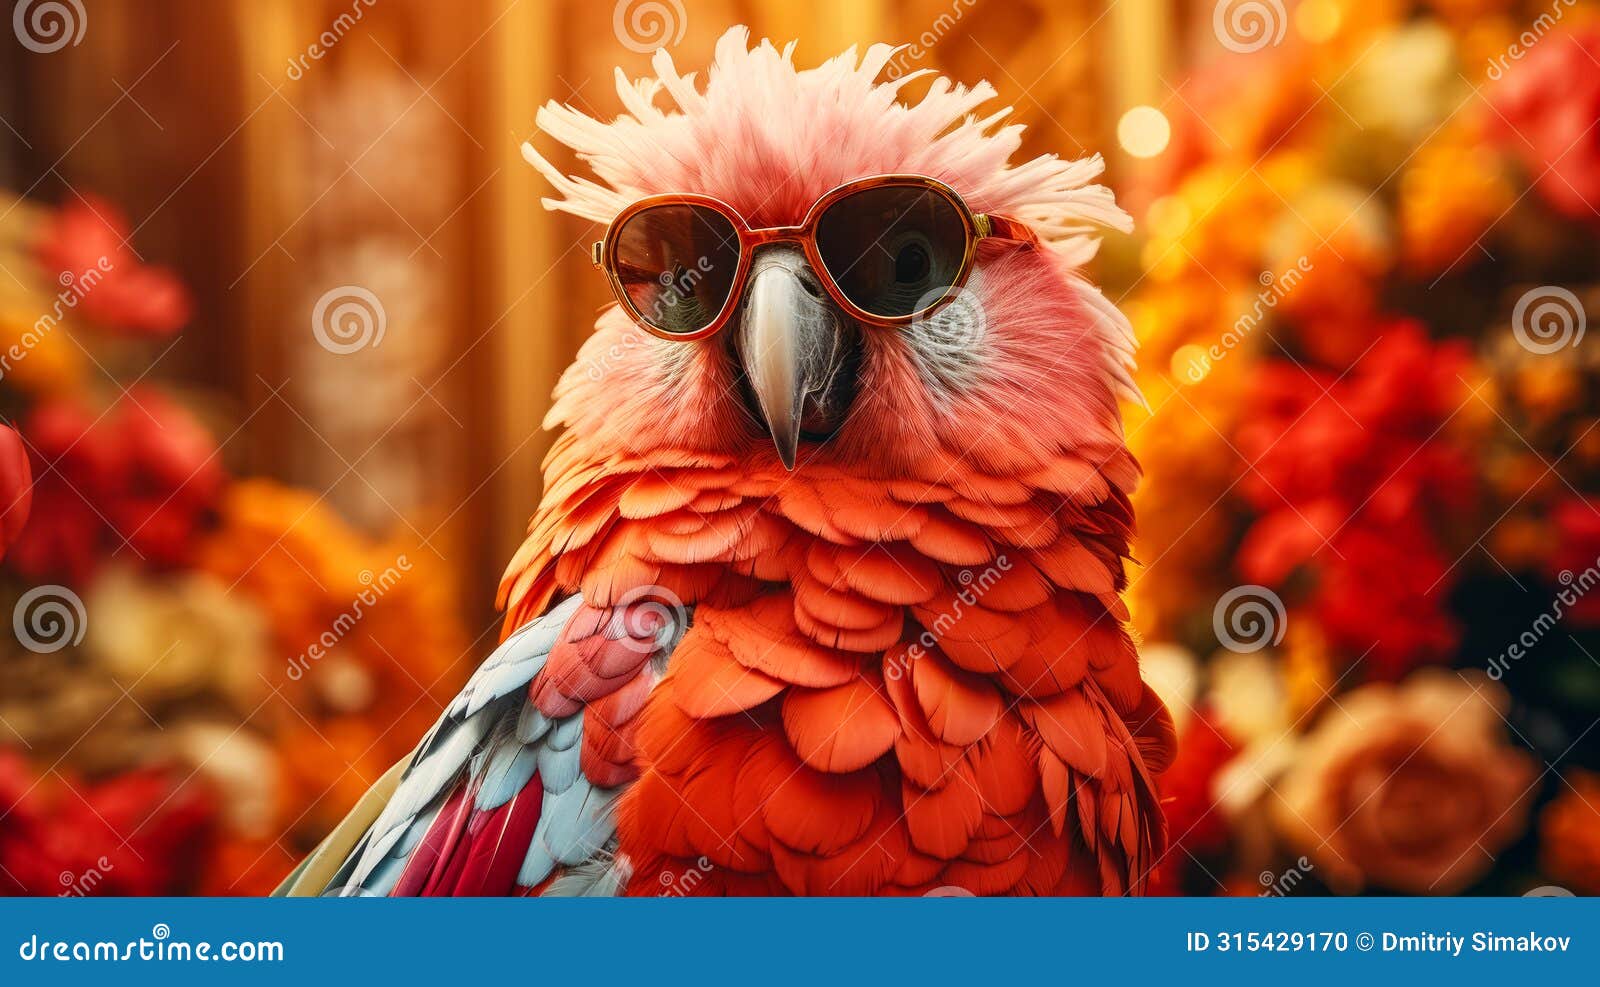 imagine a stylish parrot